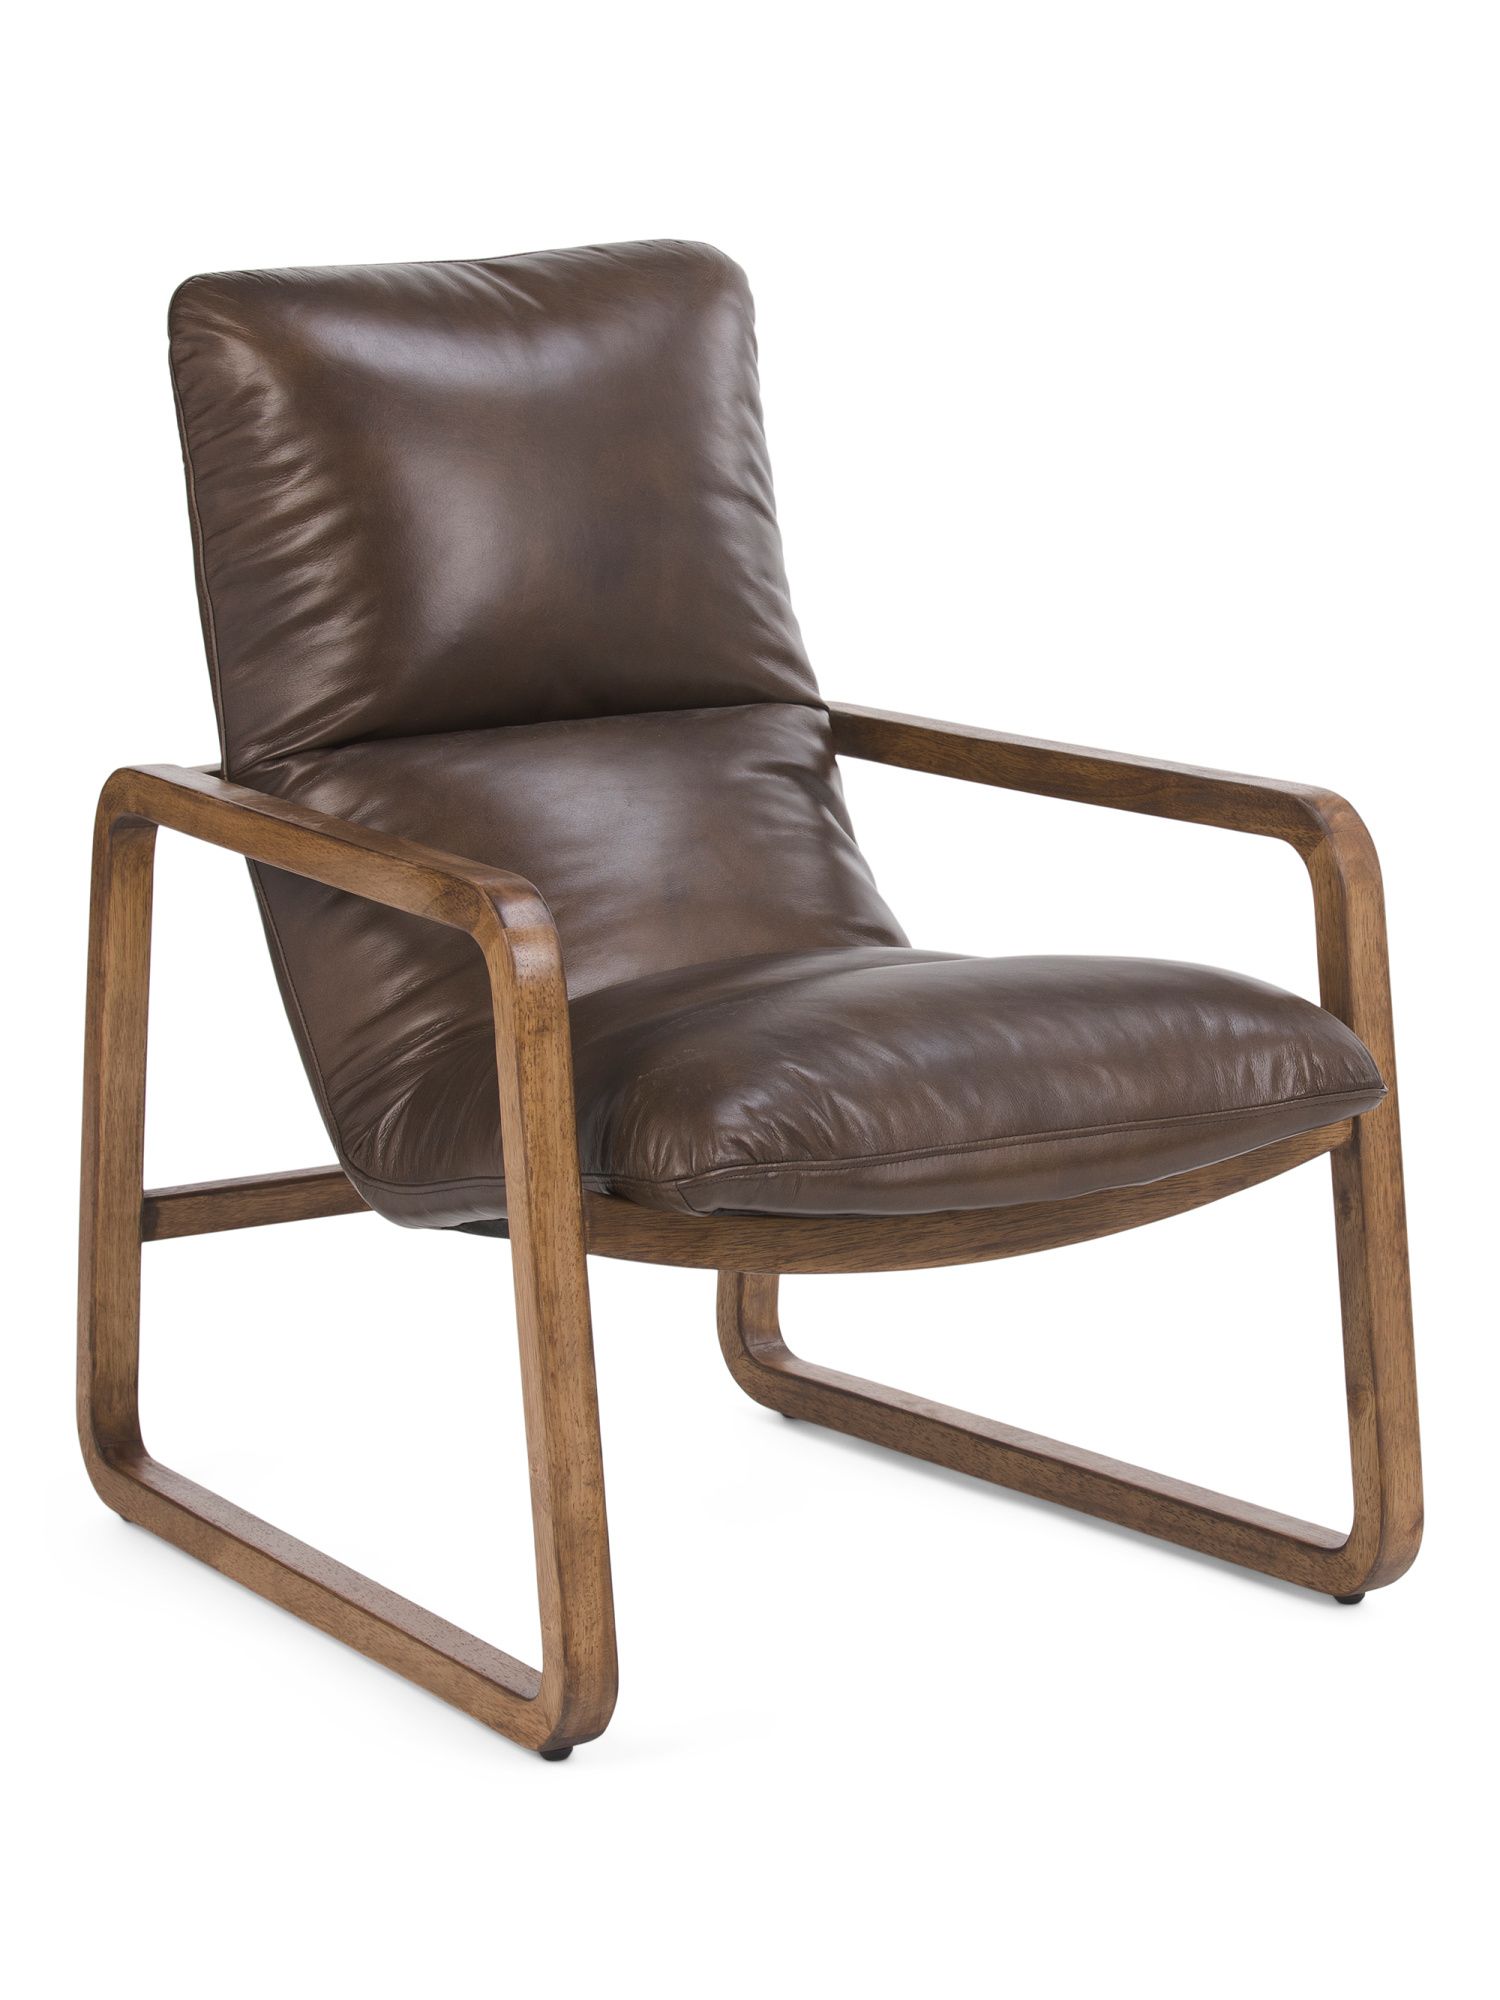 Top Grain Leather Atticus Accent Chair | TJ Maxx